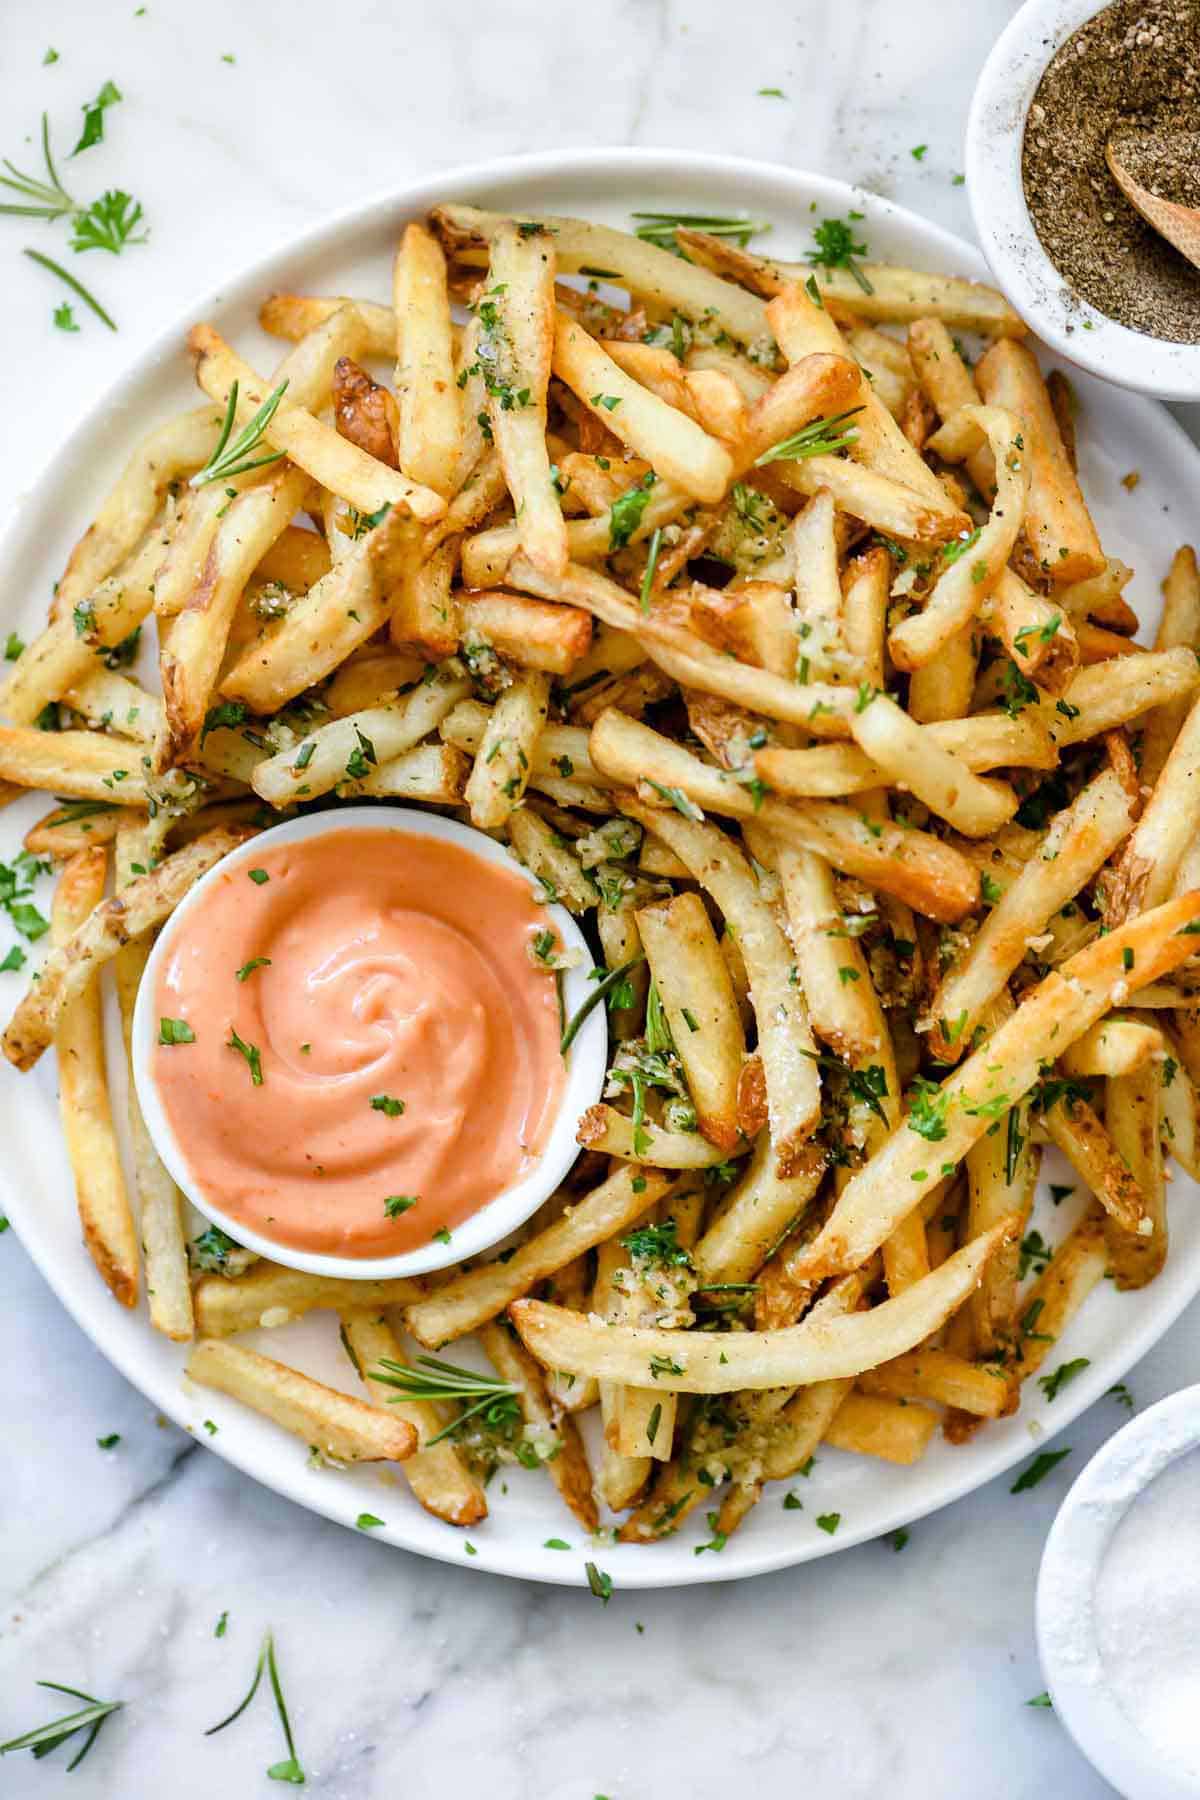 Killer garlic fries (air fryer or oven baked)